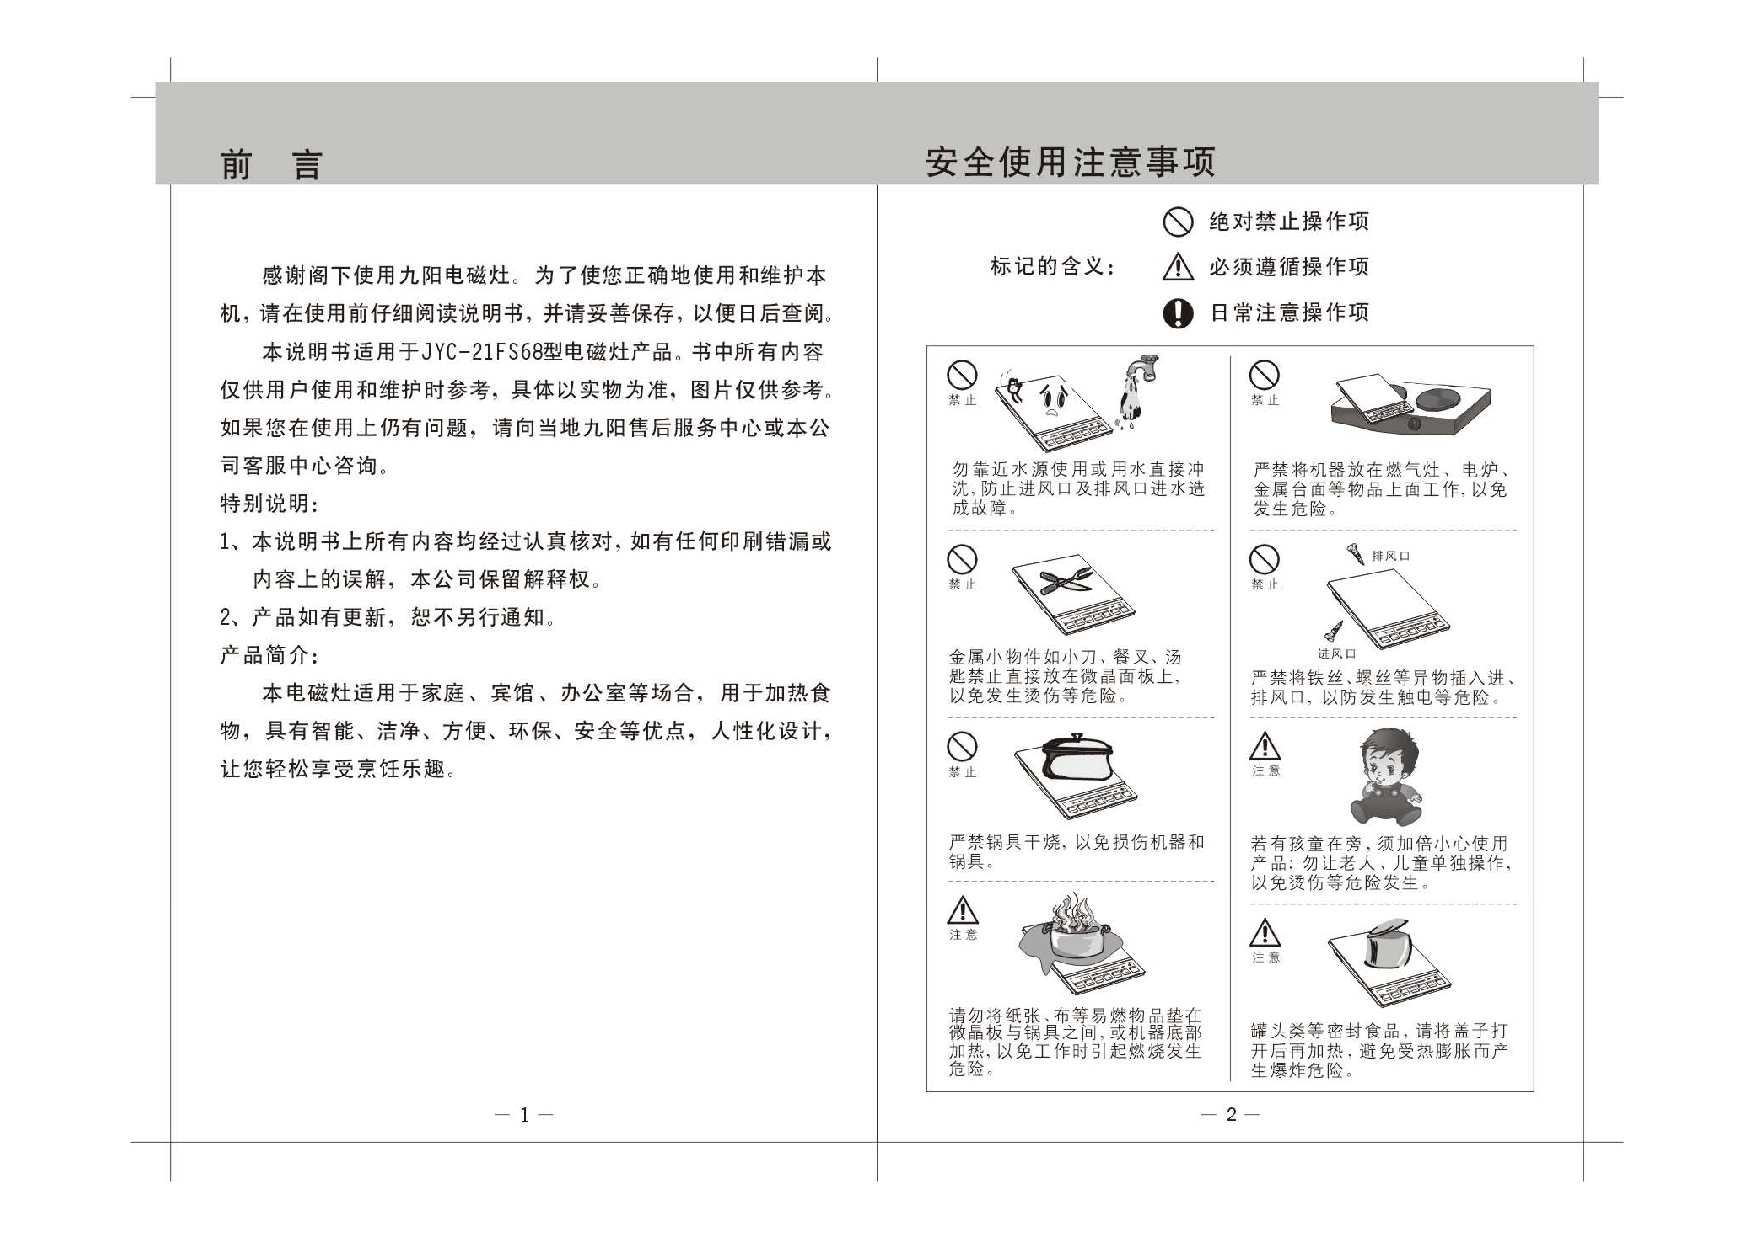 九阳 Joyyoung JYC-21FS68 使用说明书 第2页